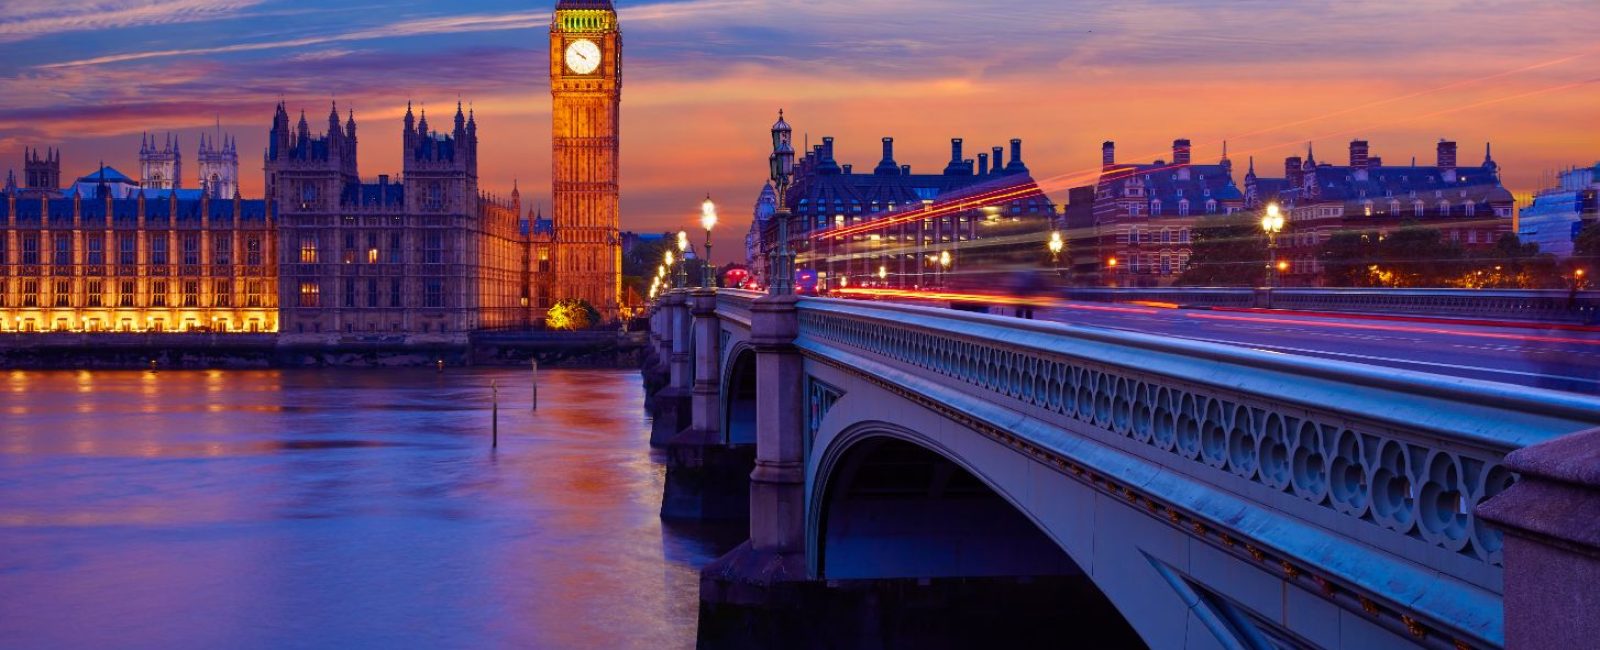 big-ben-clock-tower-london-thames-river